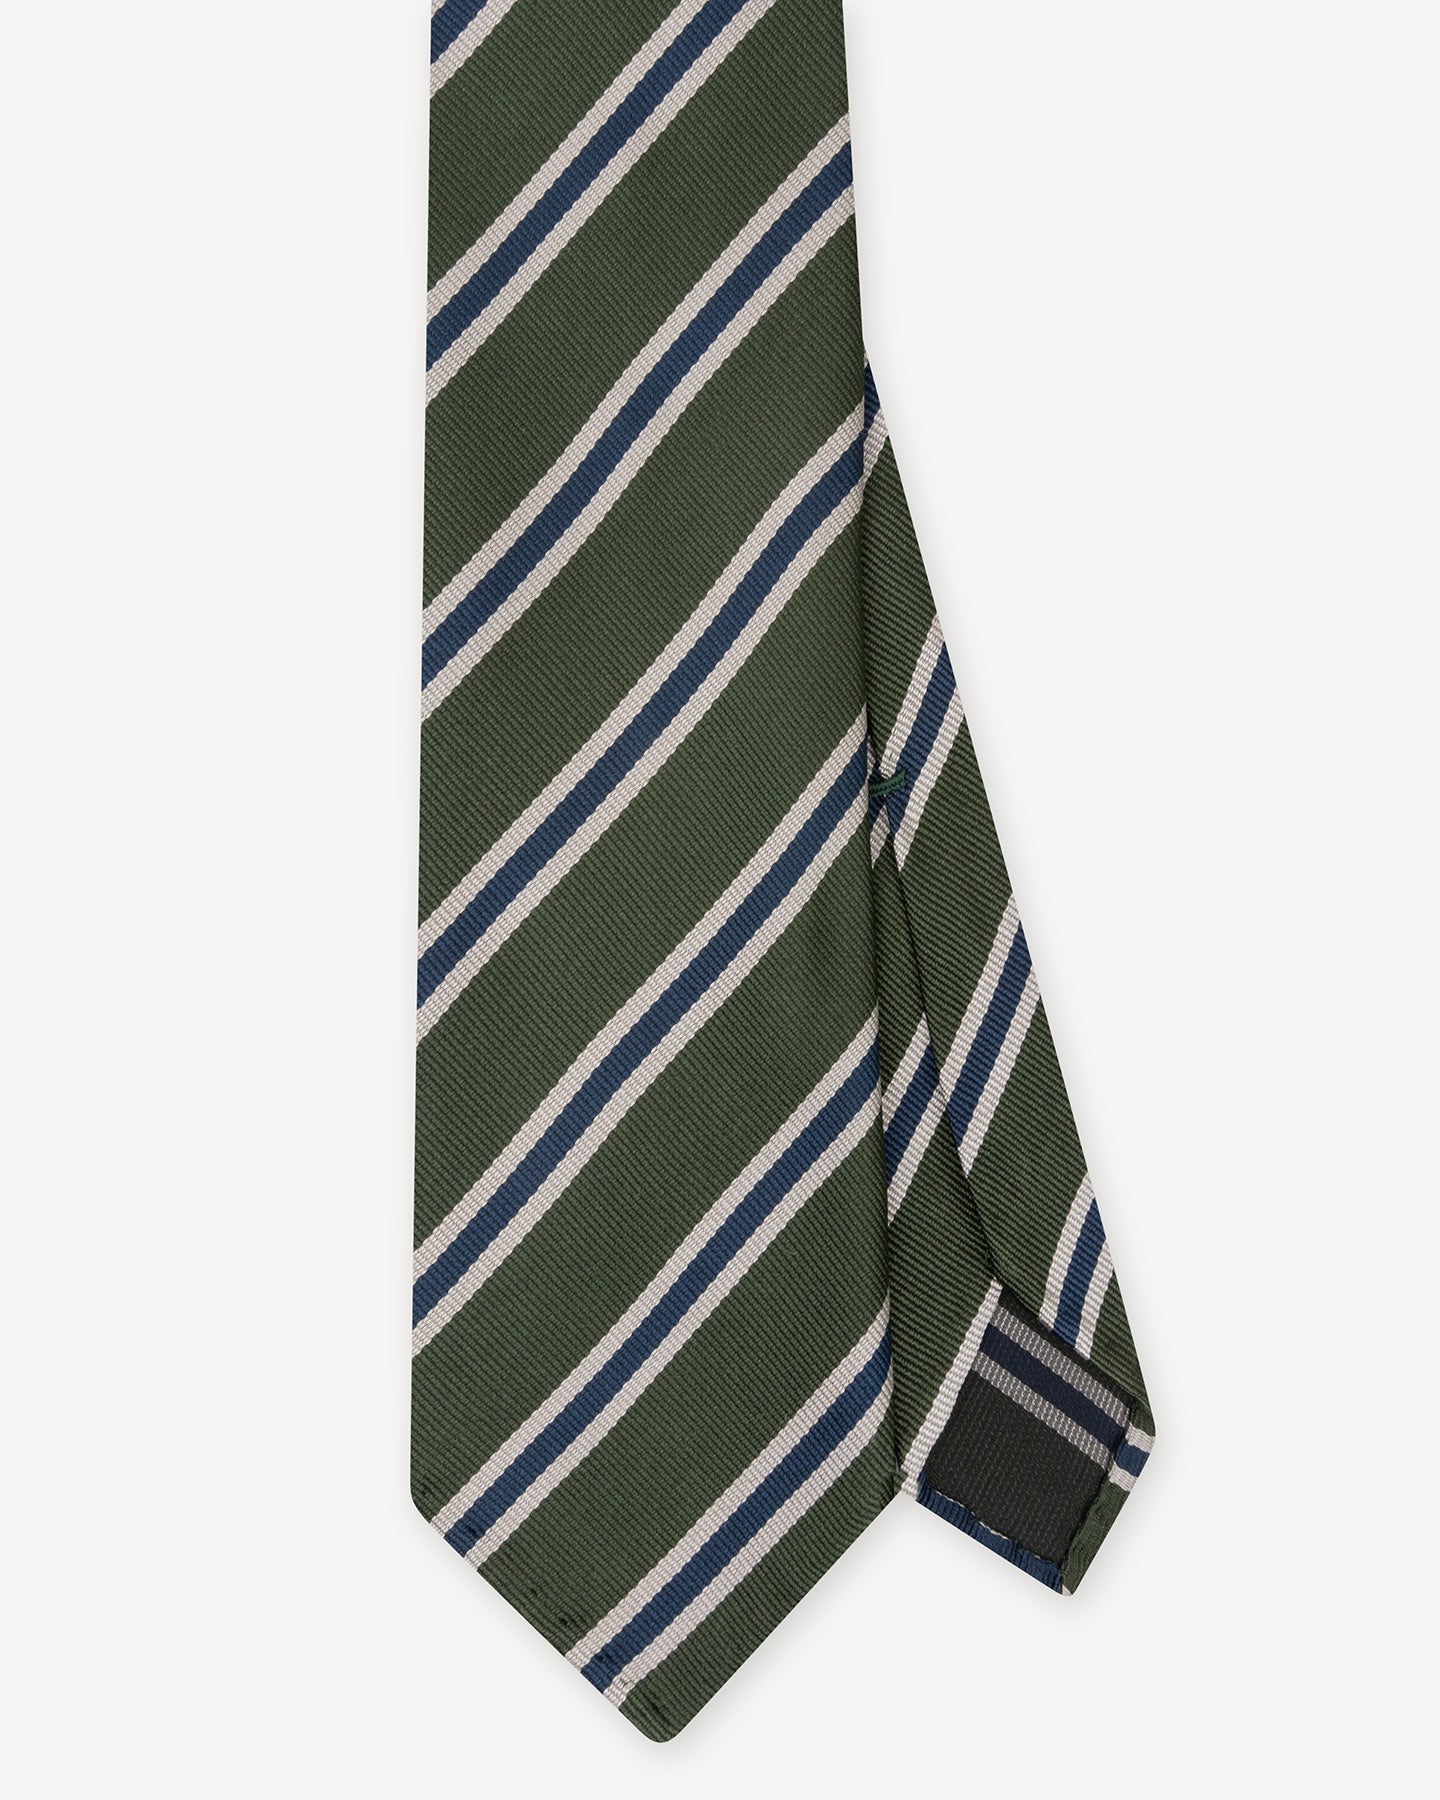 Green, Tan and Navy Regimental Stripe Repp Tie